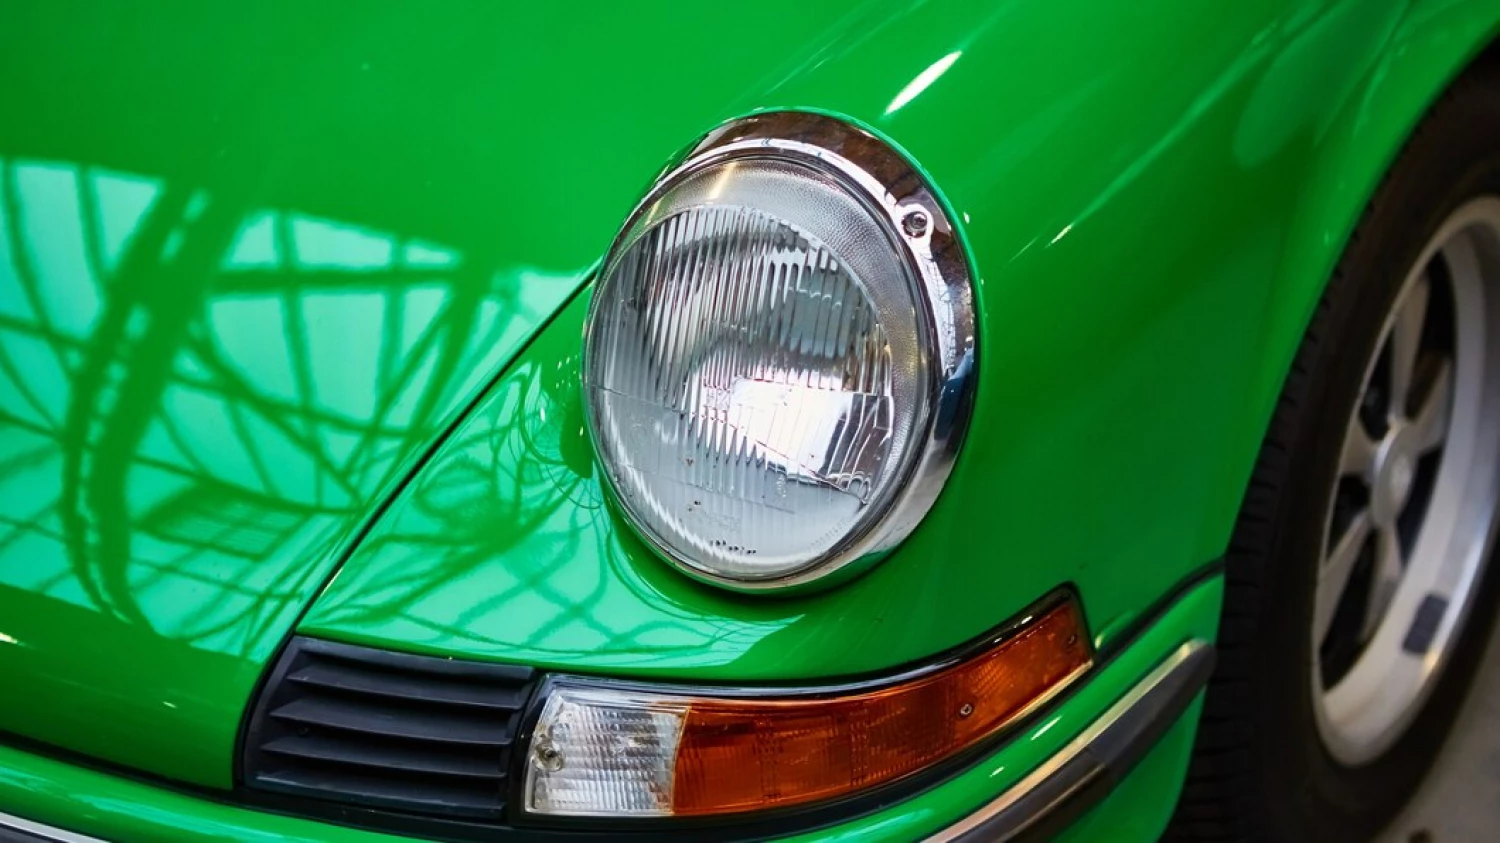 detail-classic-car-closeup-headlight_355018-237